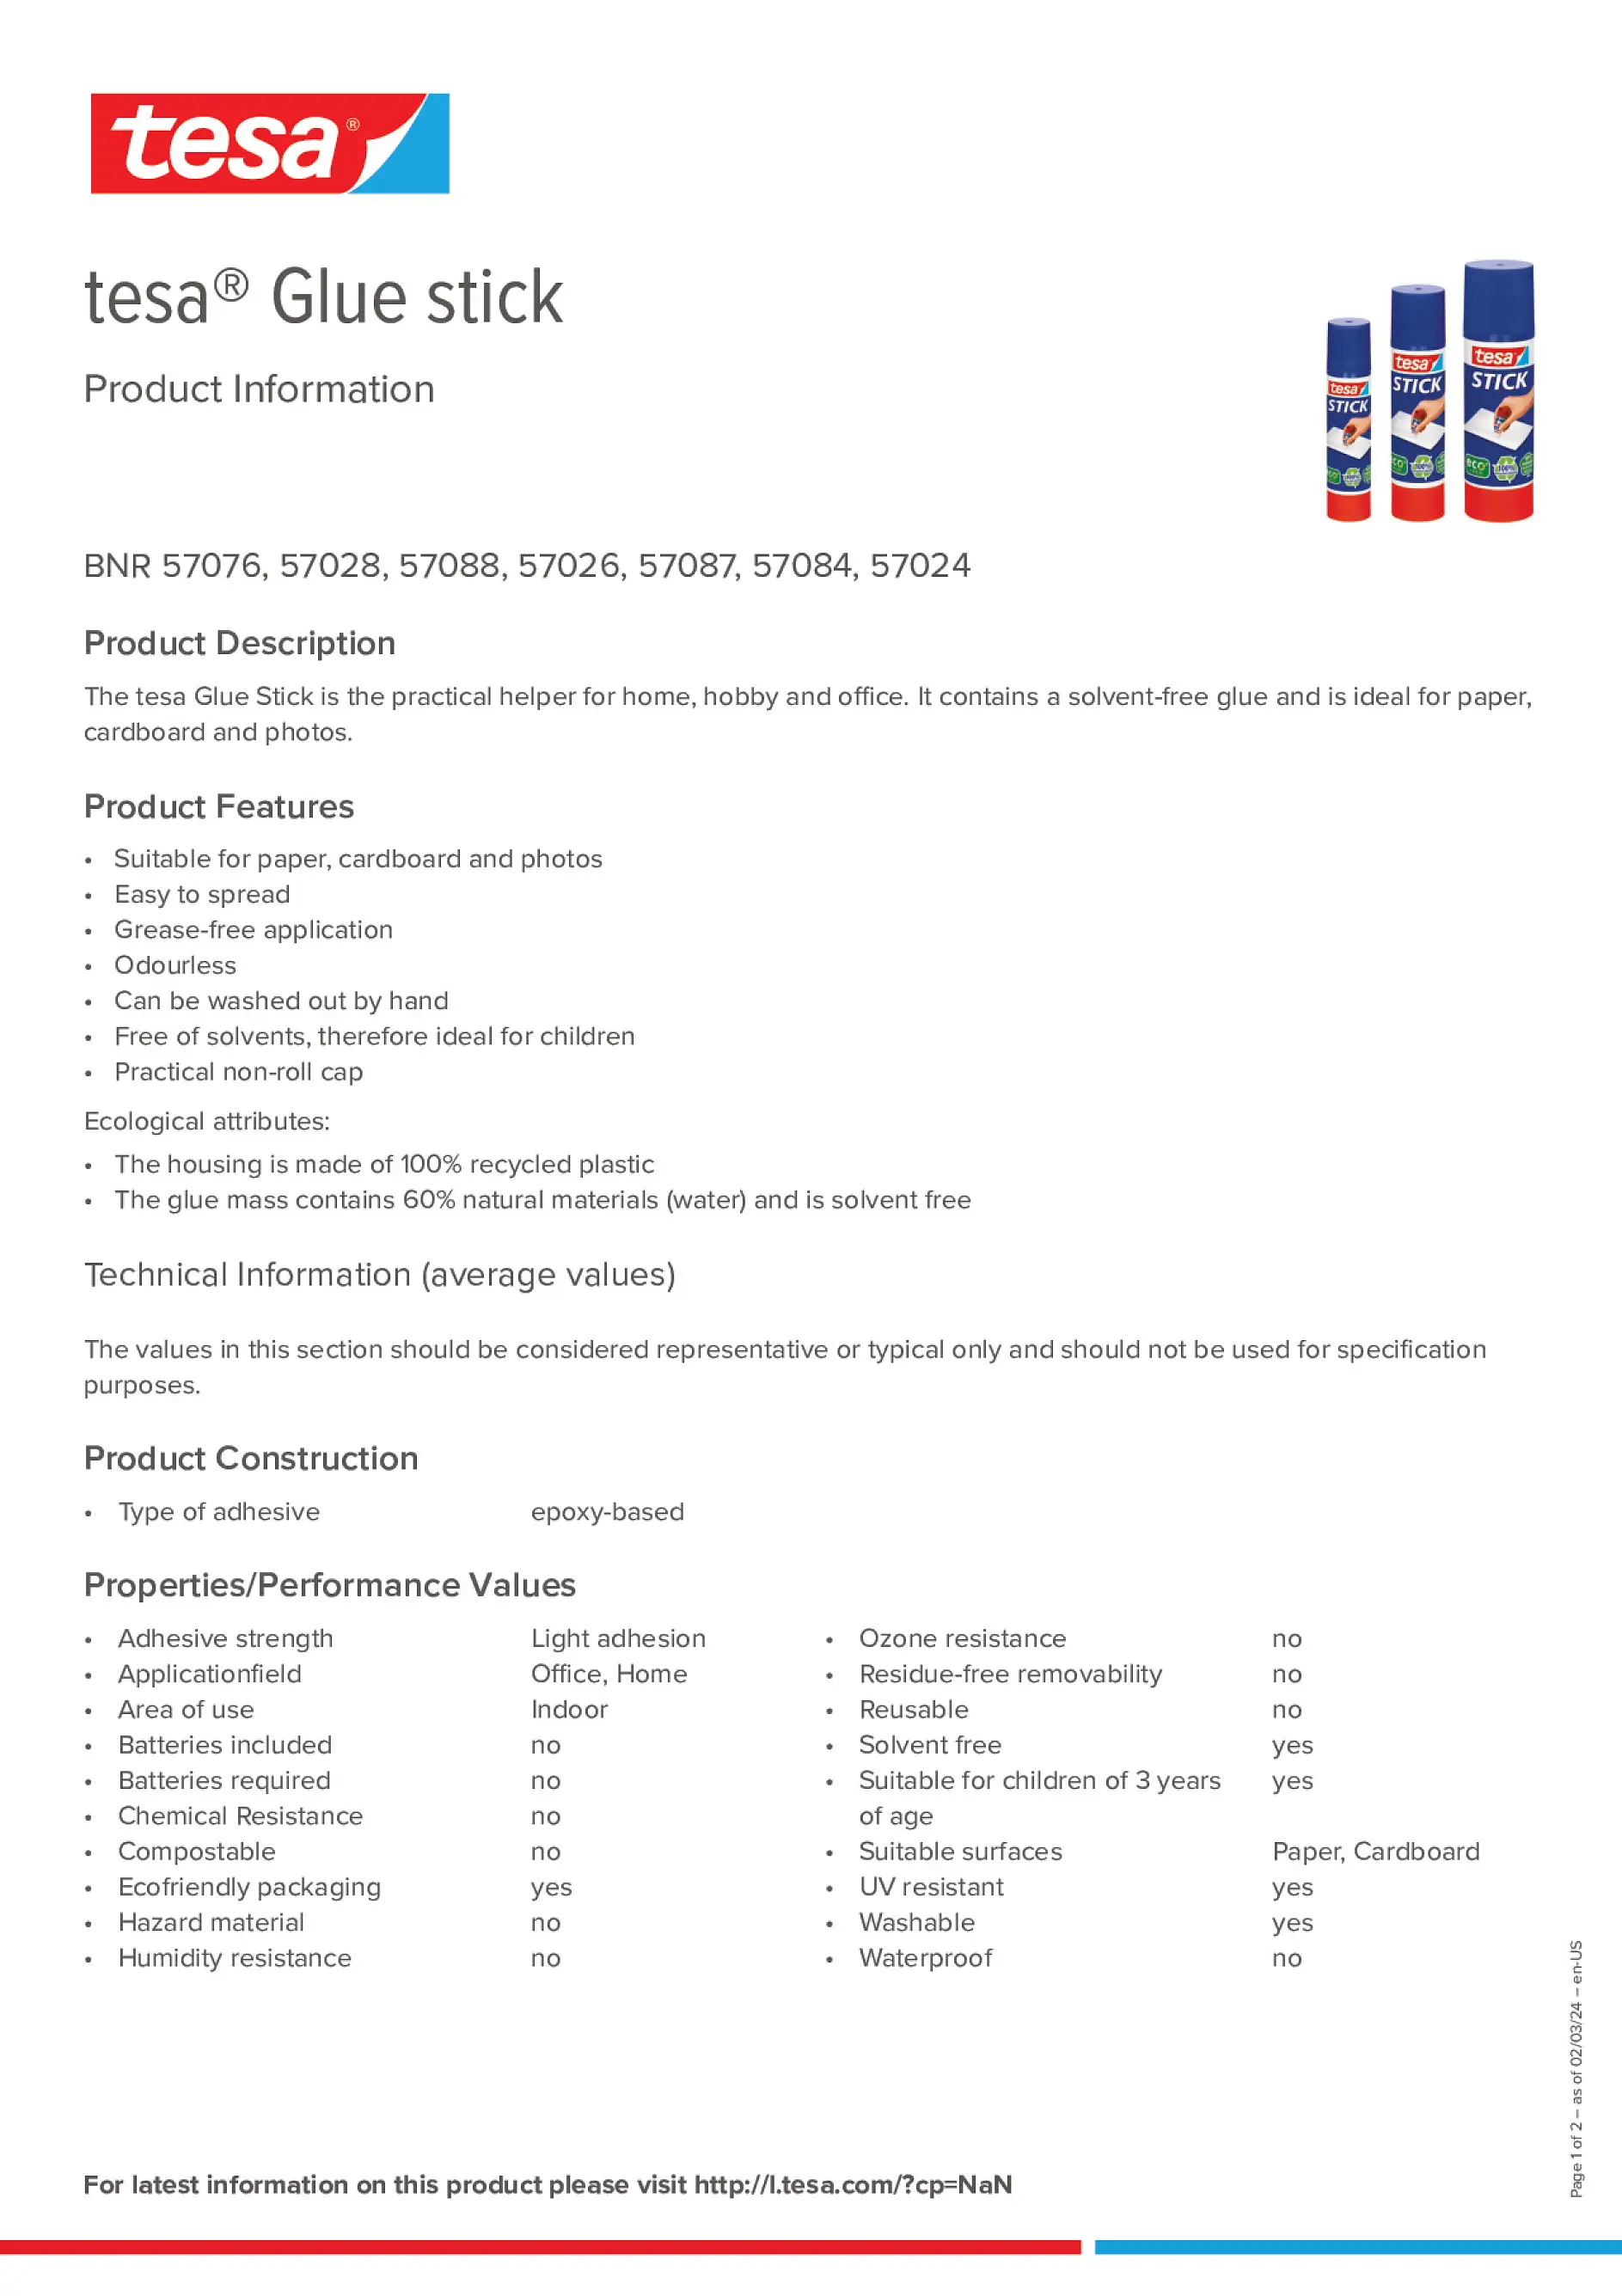 Product information_tesa® 57028_en